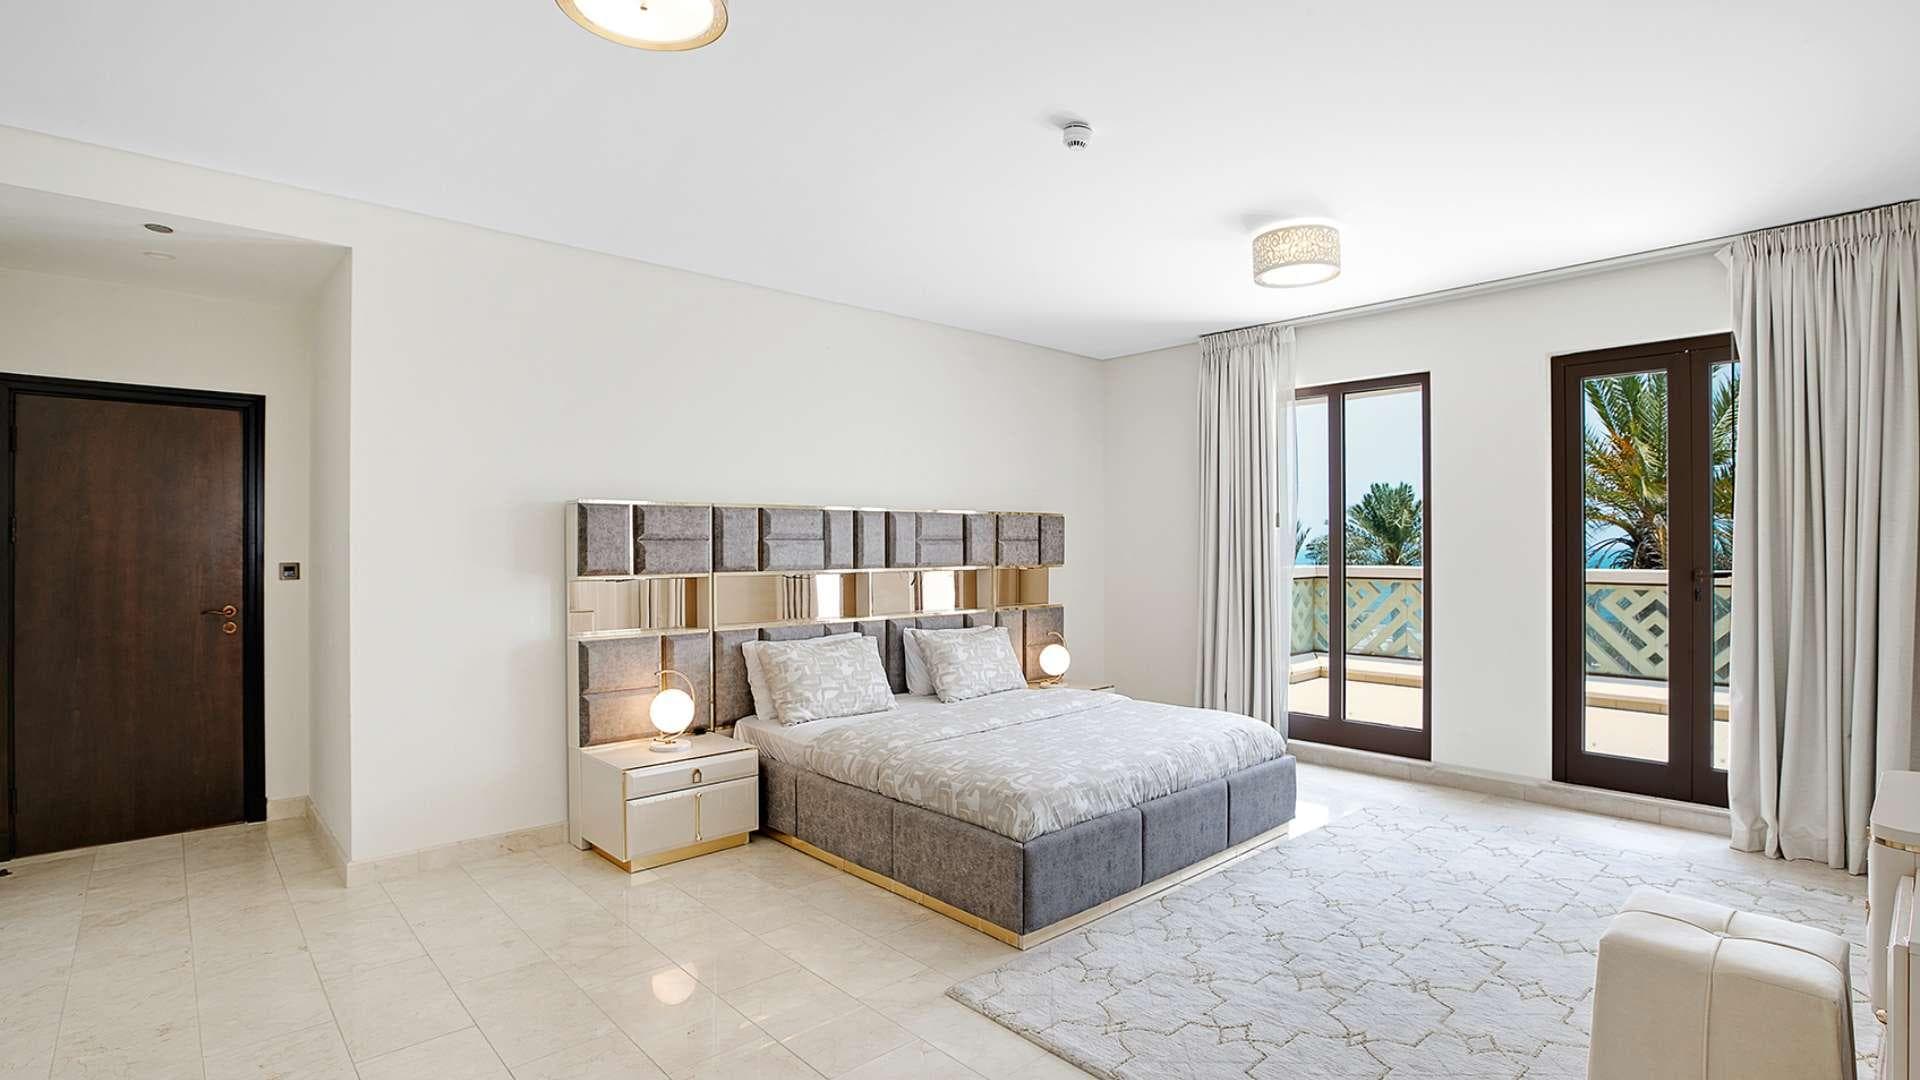 5 Bedroom Villa For Sale Kingdom Of Sheba Lp36453 129b6abb1a7aac00.jpg